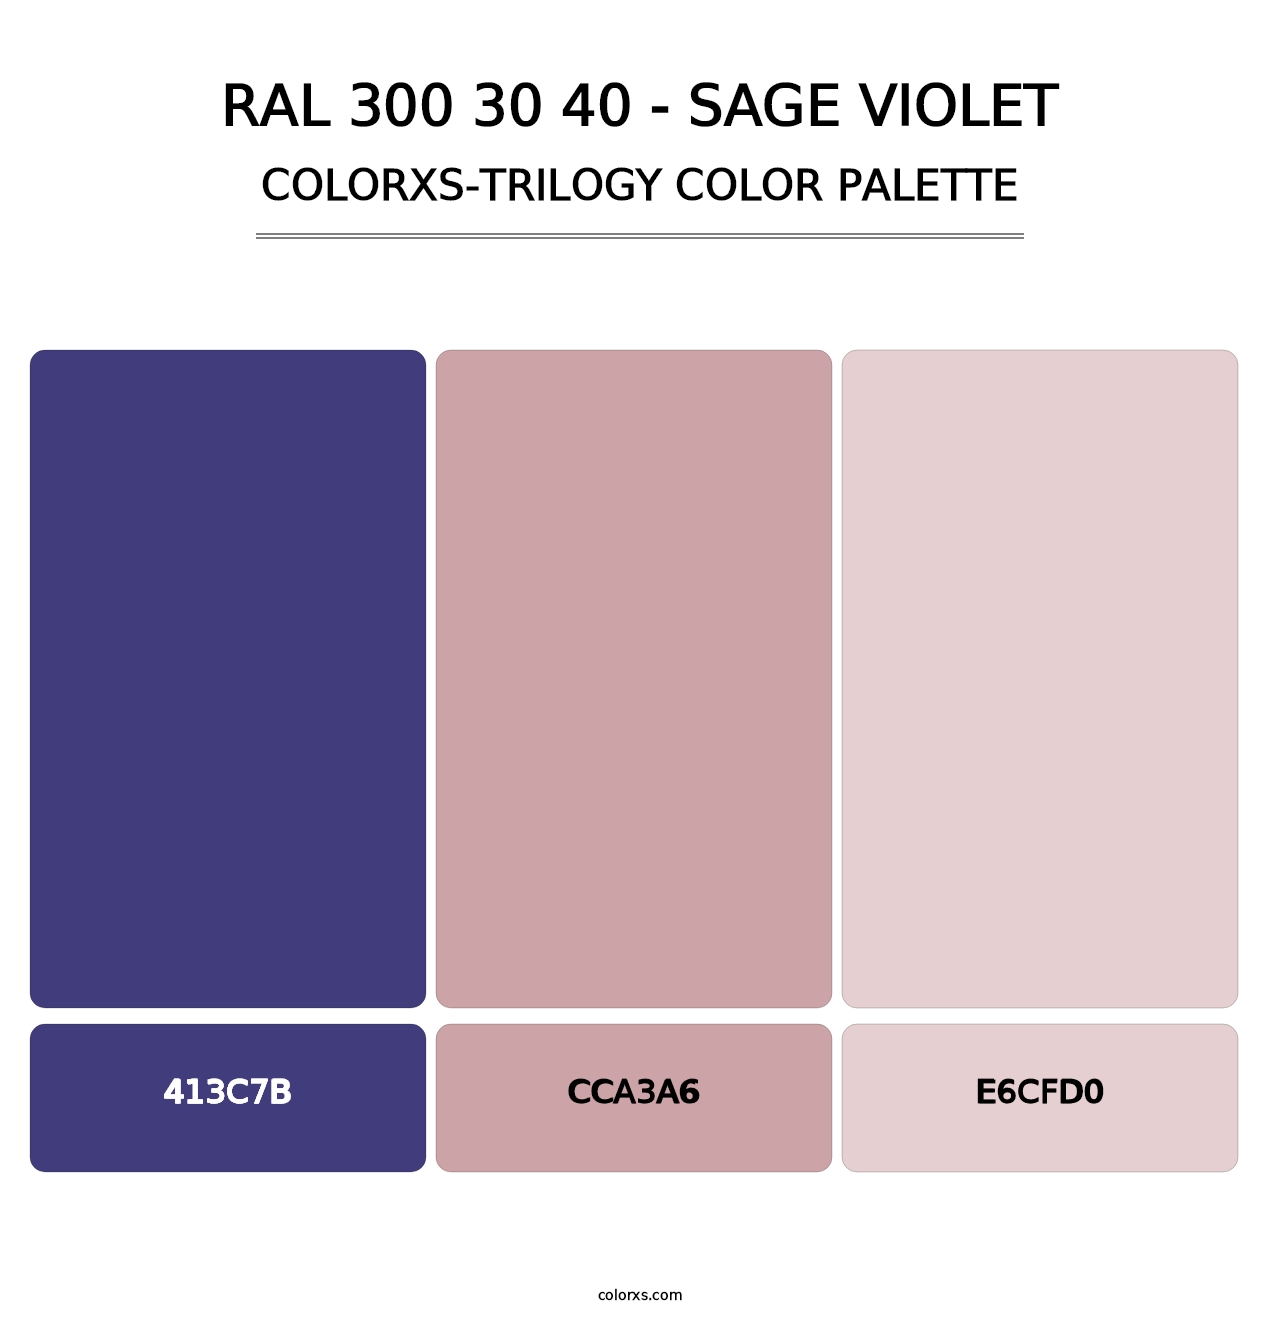 RAL 300 30 40 - Sage Violet - Colorxs Trilogy Palette